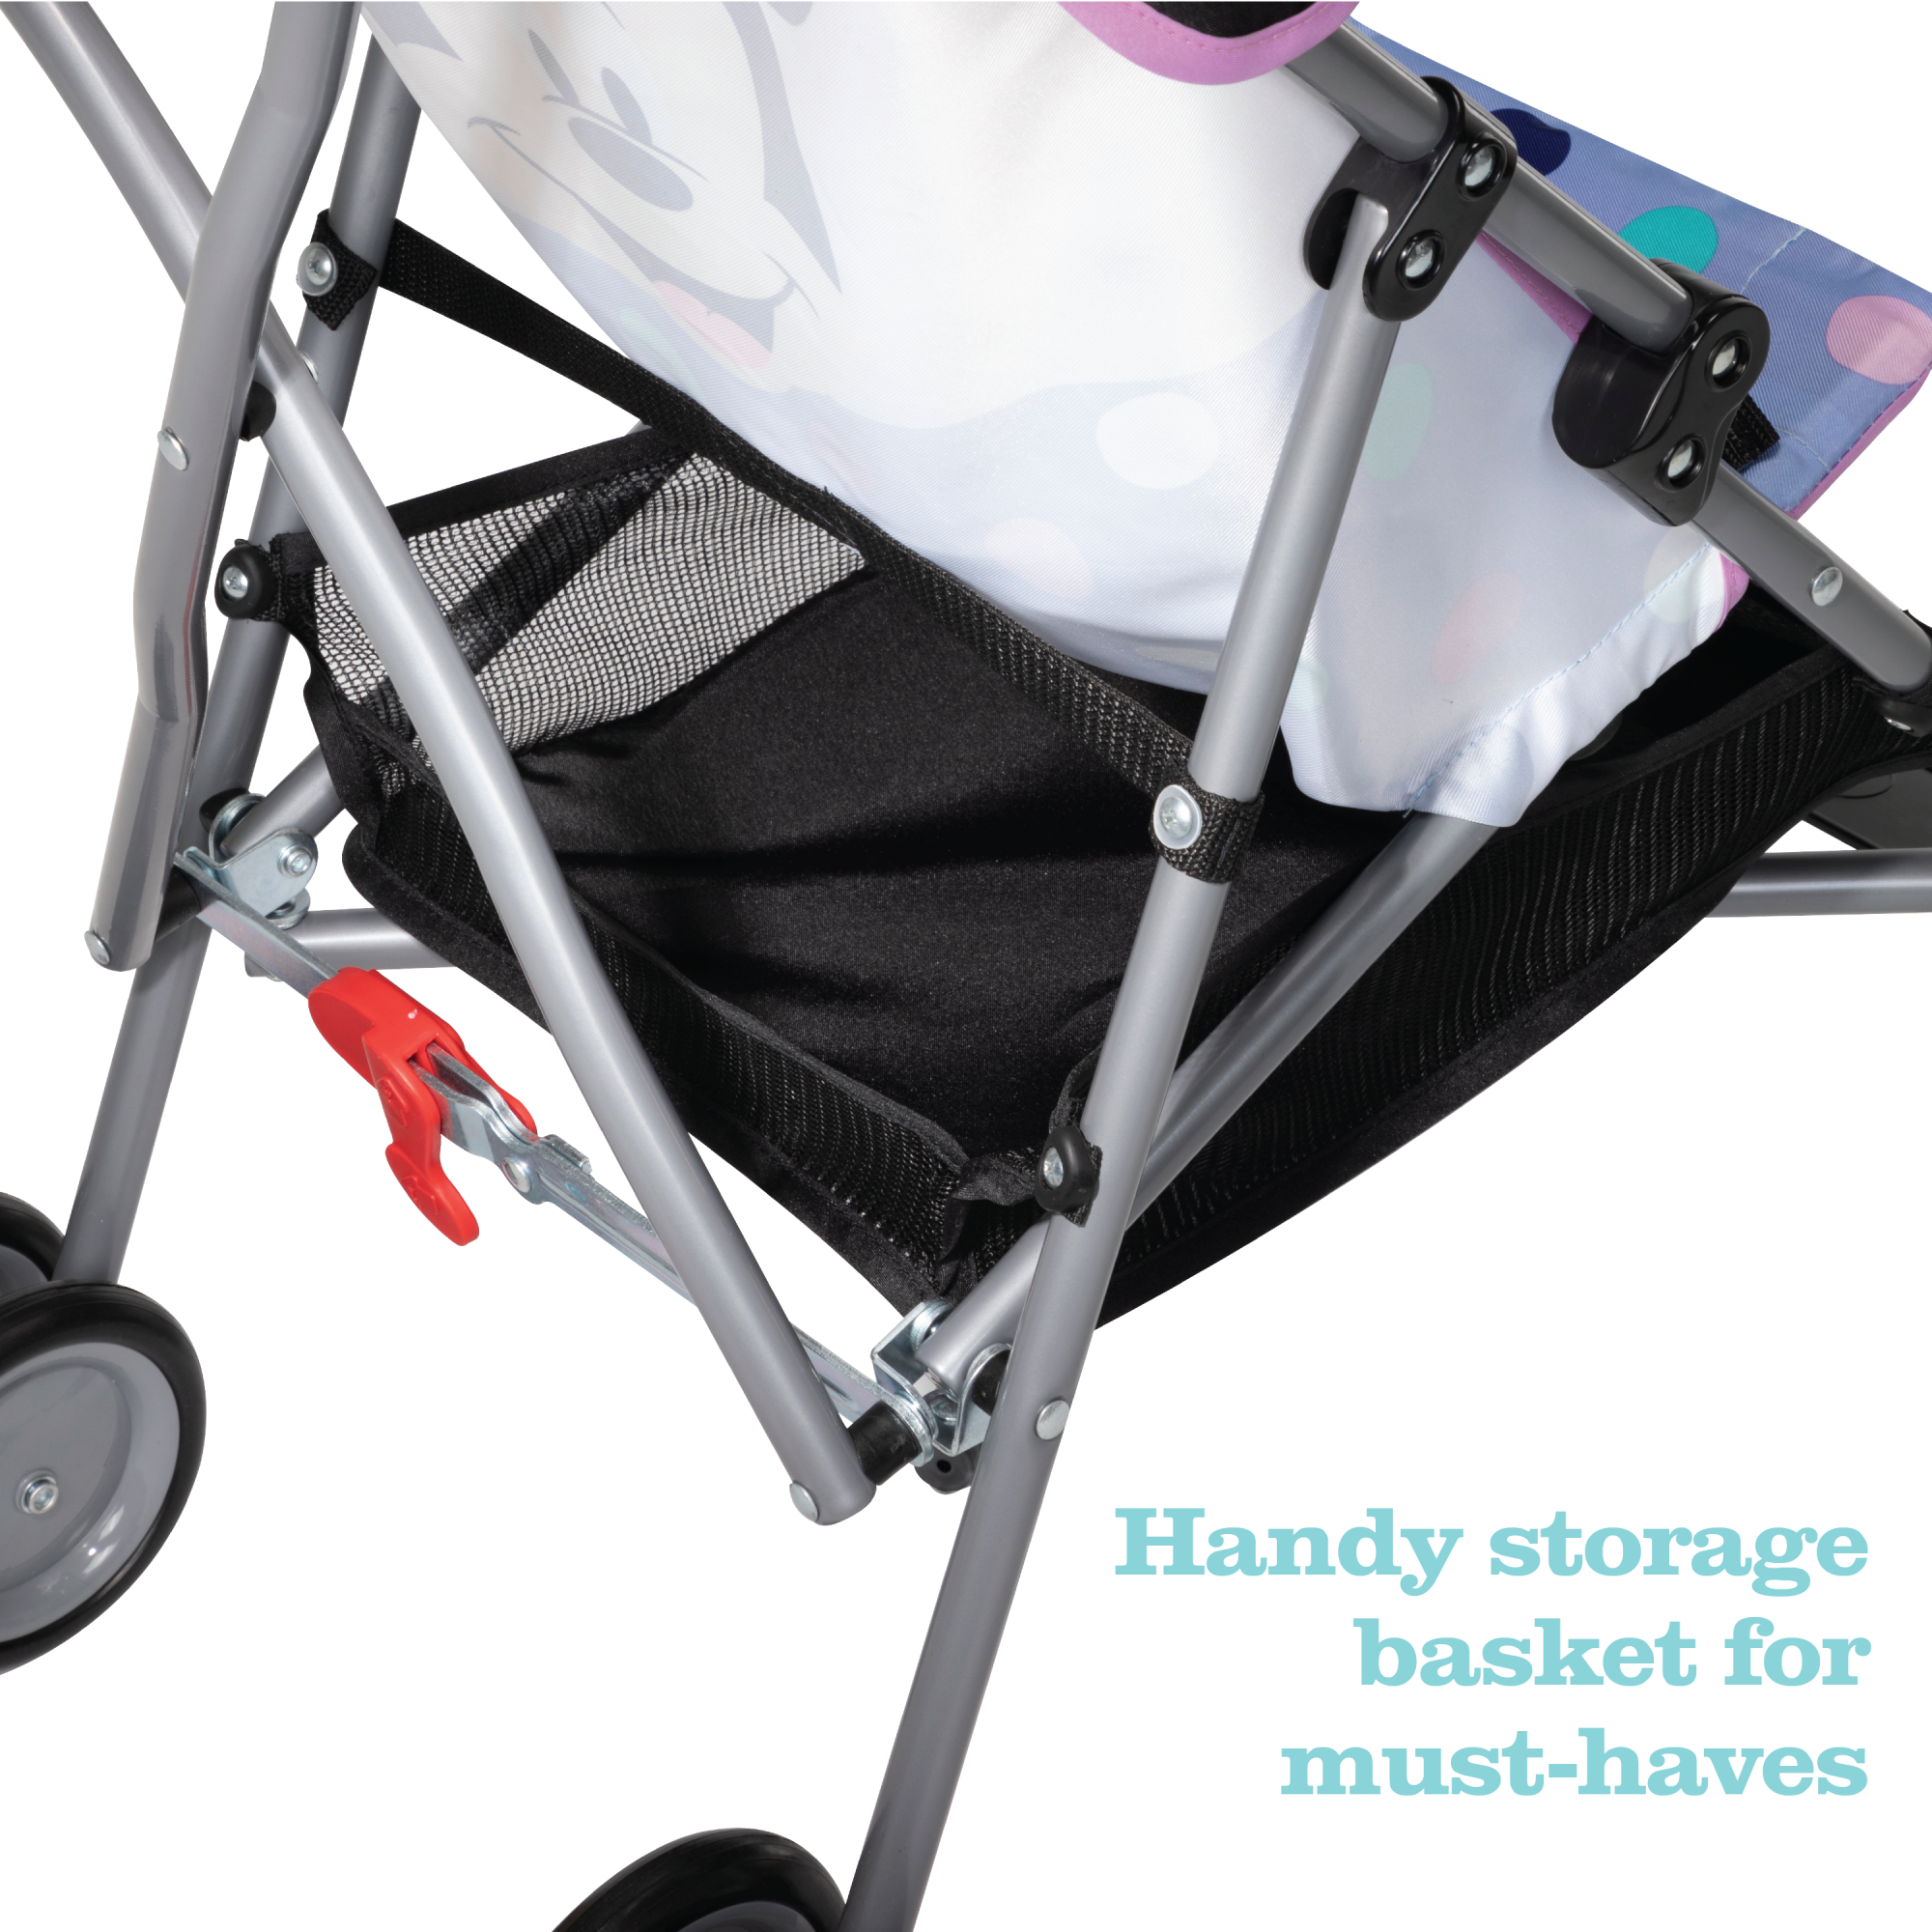 Disney Baby Character Umbrella Stroller - handy storage basket for must-haves